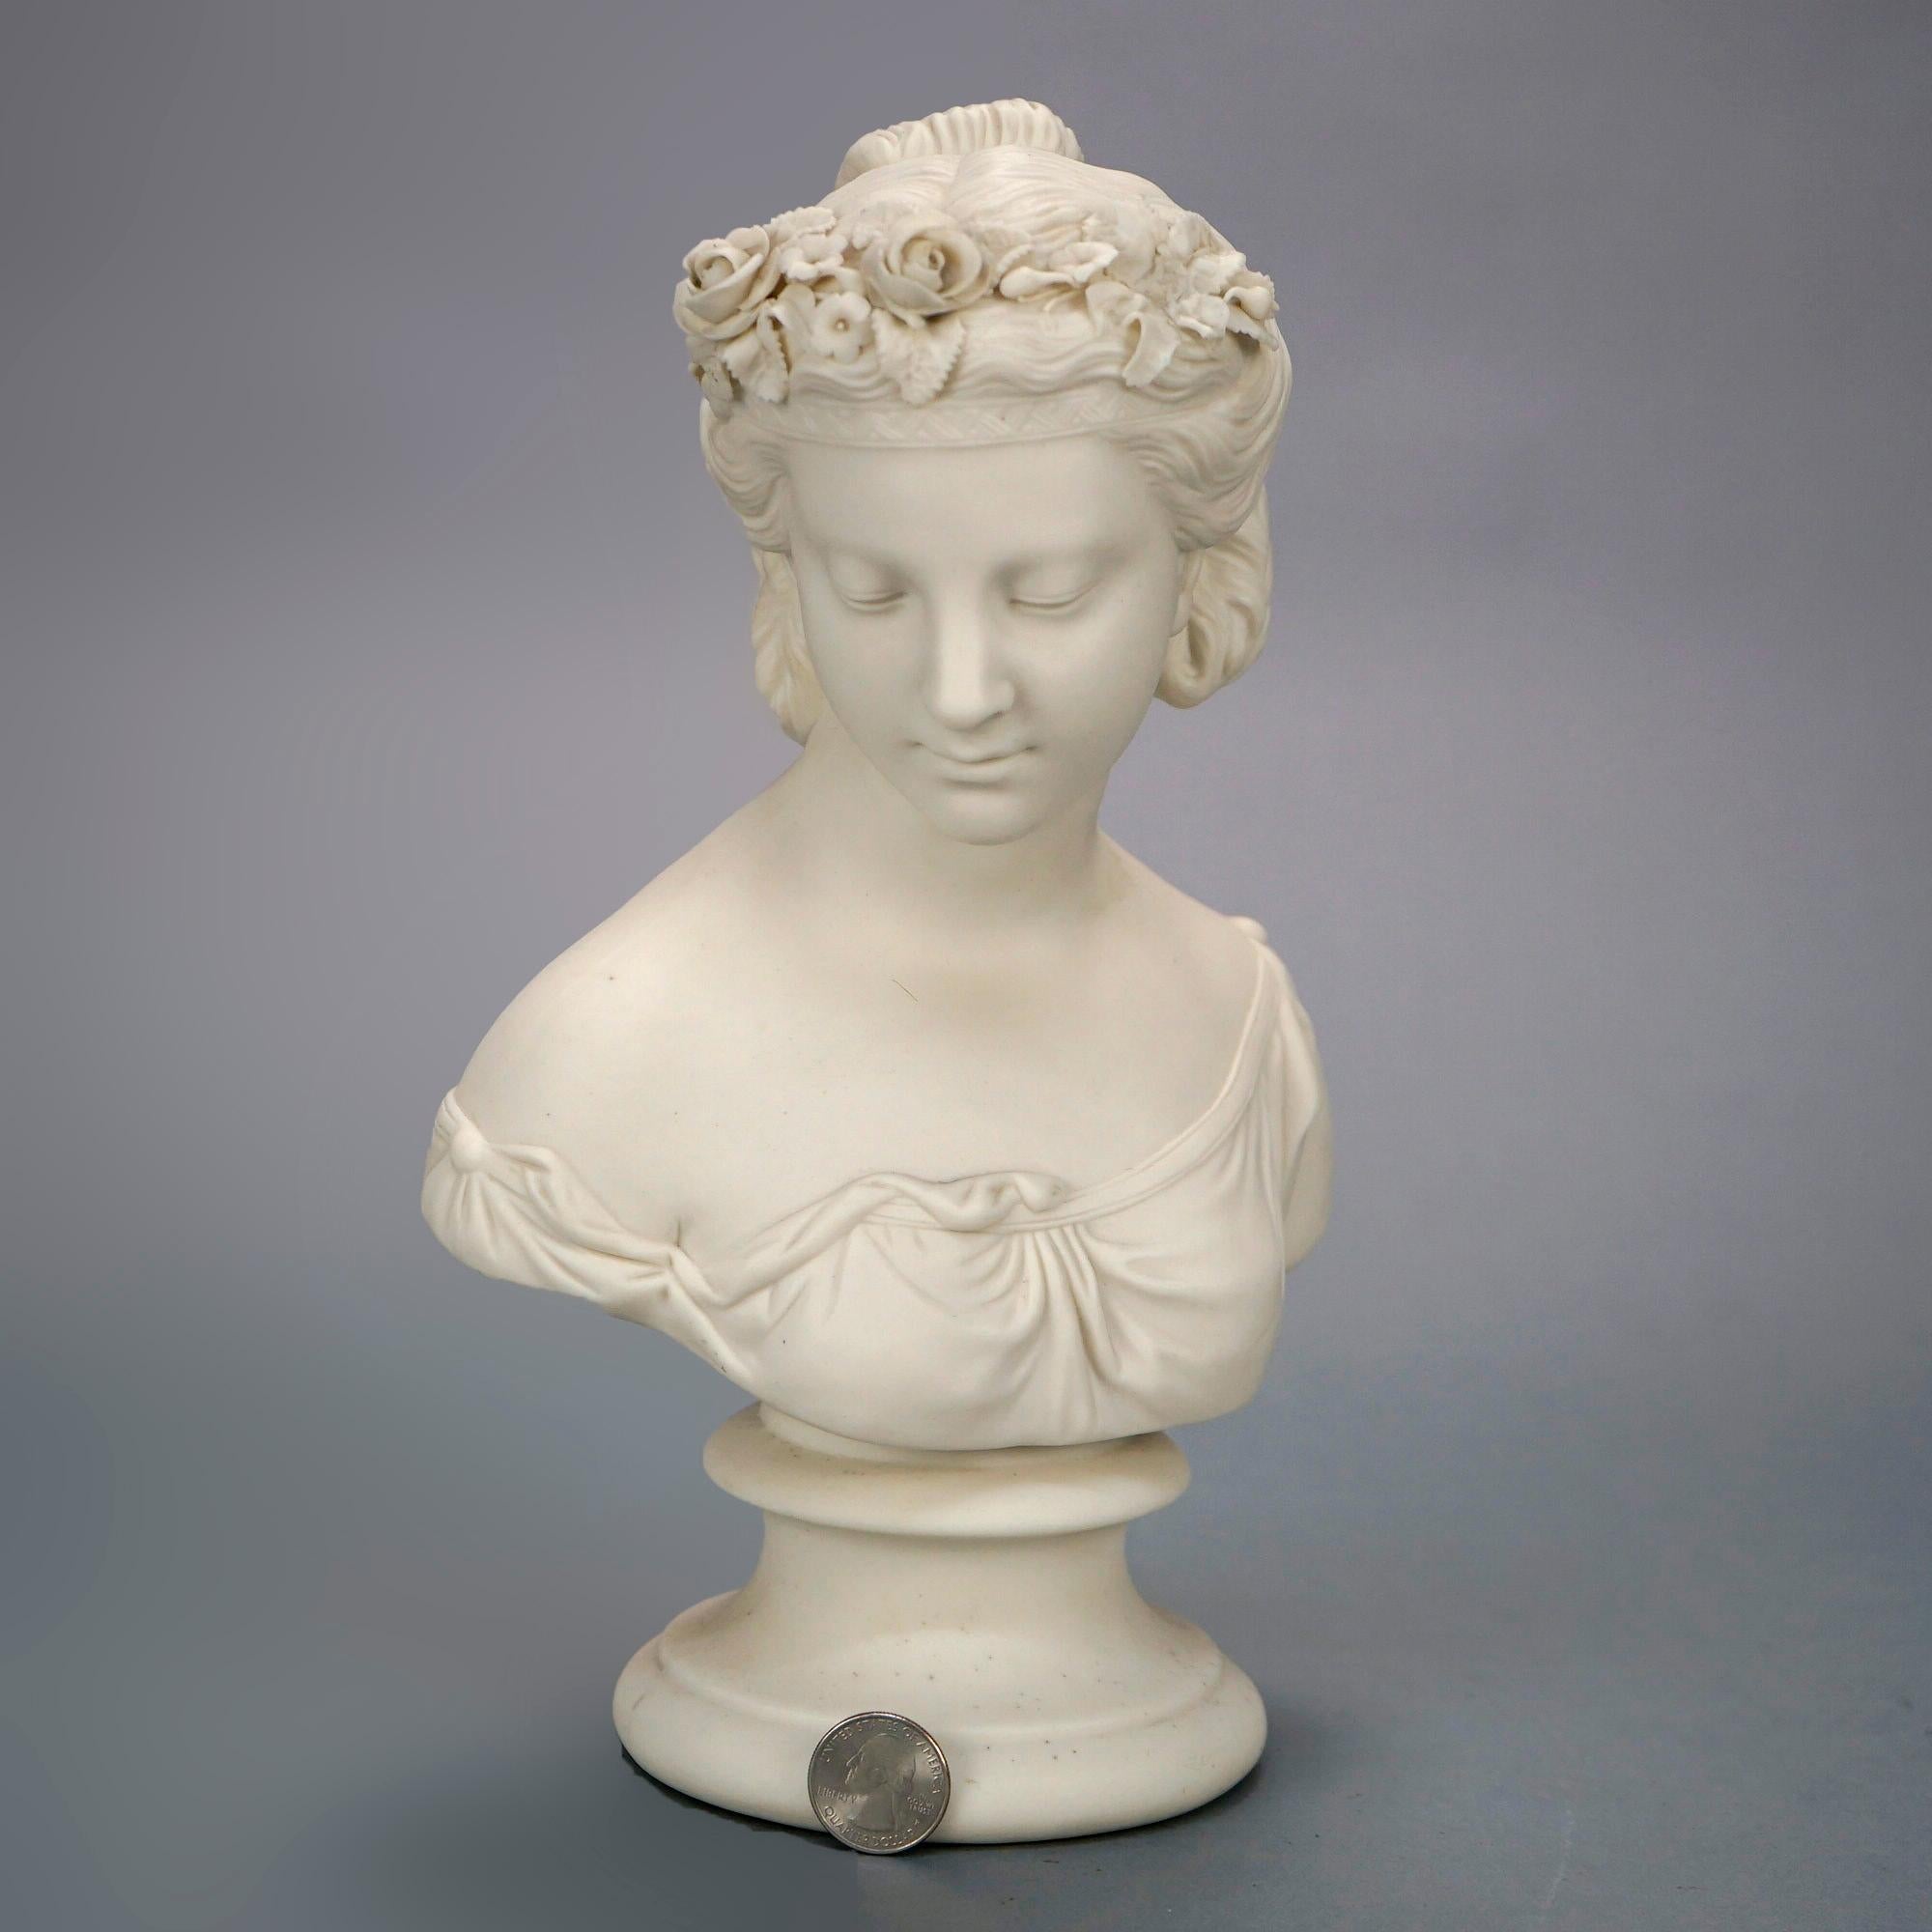 Porcelain Antique Parian Sculpture Bust of a Classical Young Woman 19th C